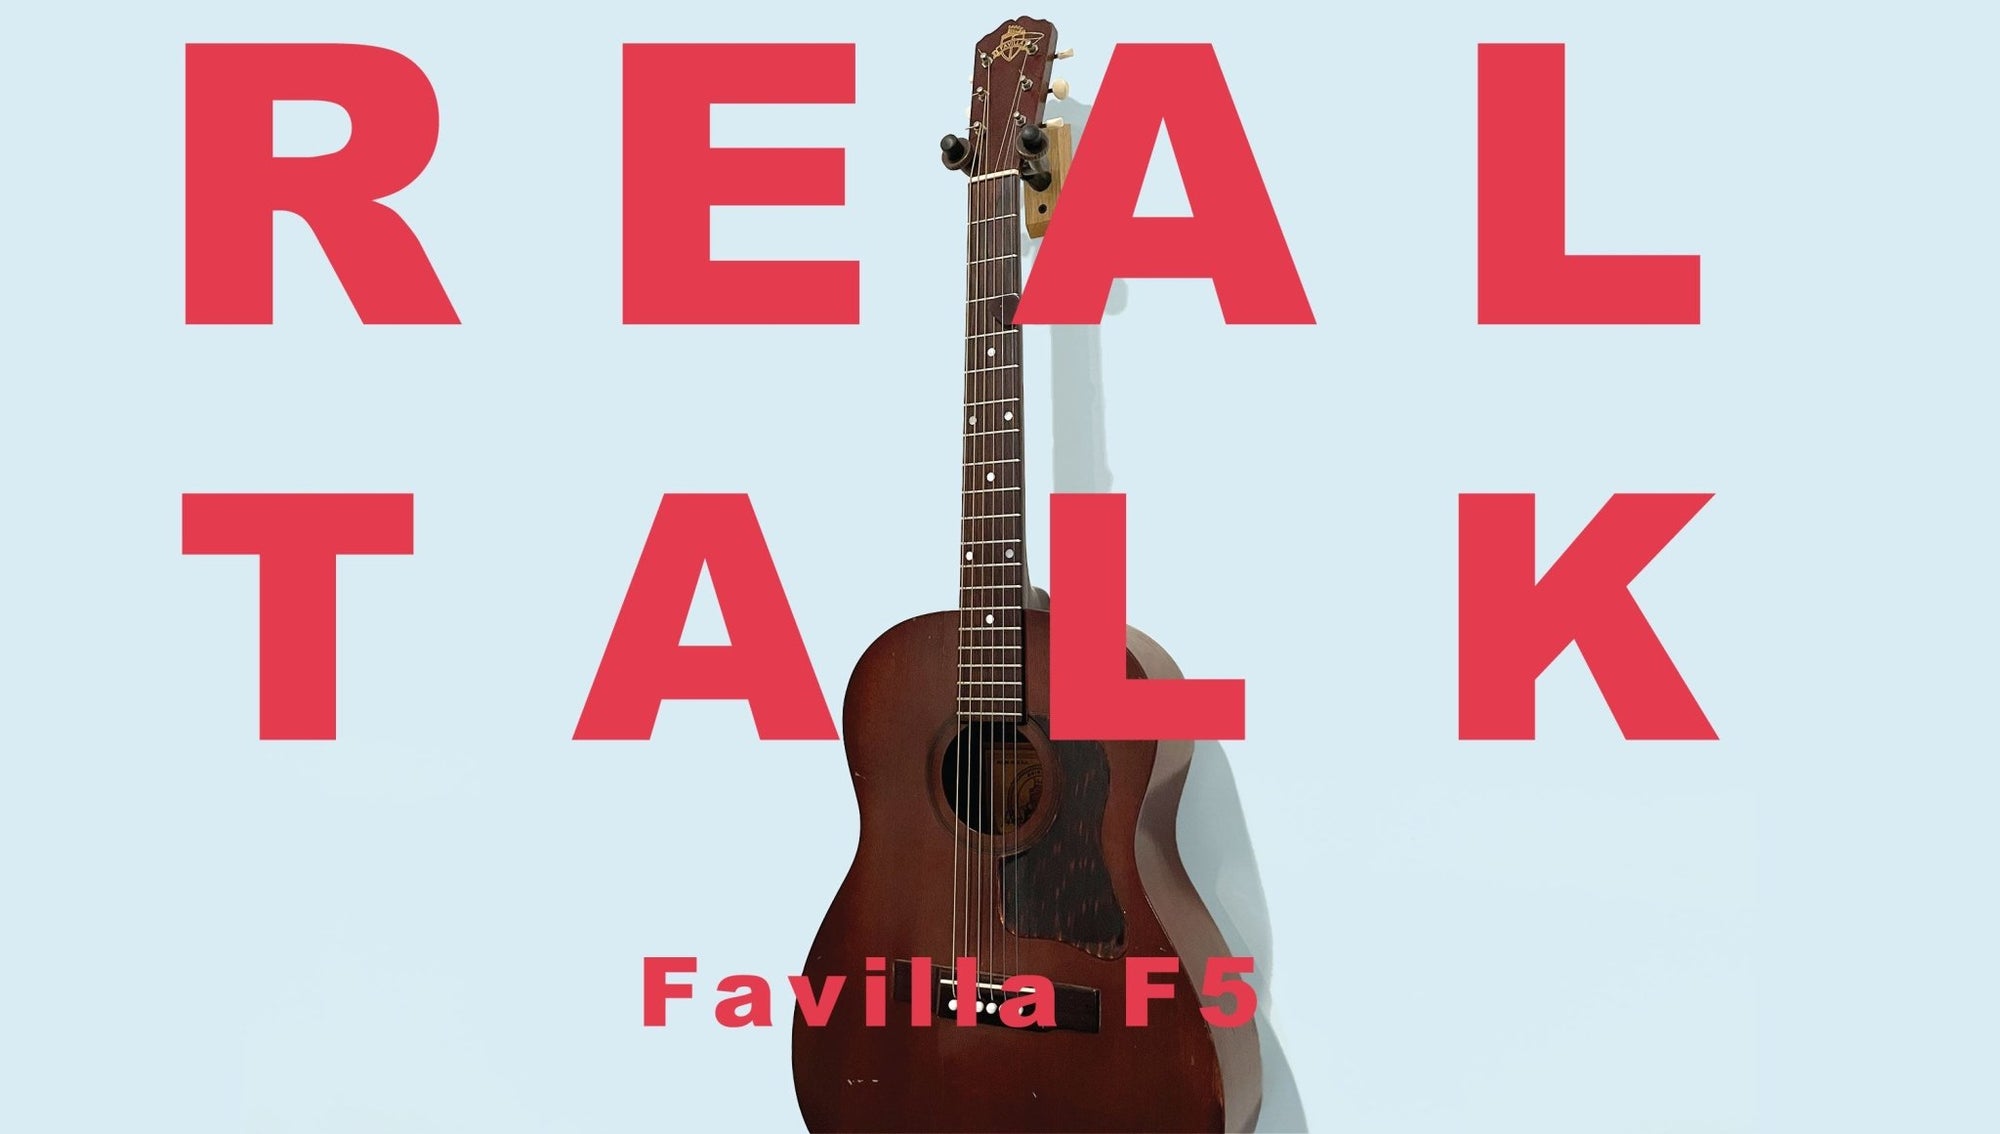 The Favilla F5 Guitar - grown&sewn